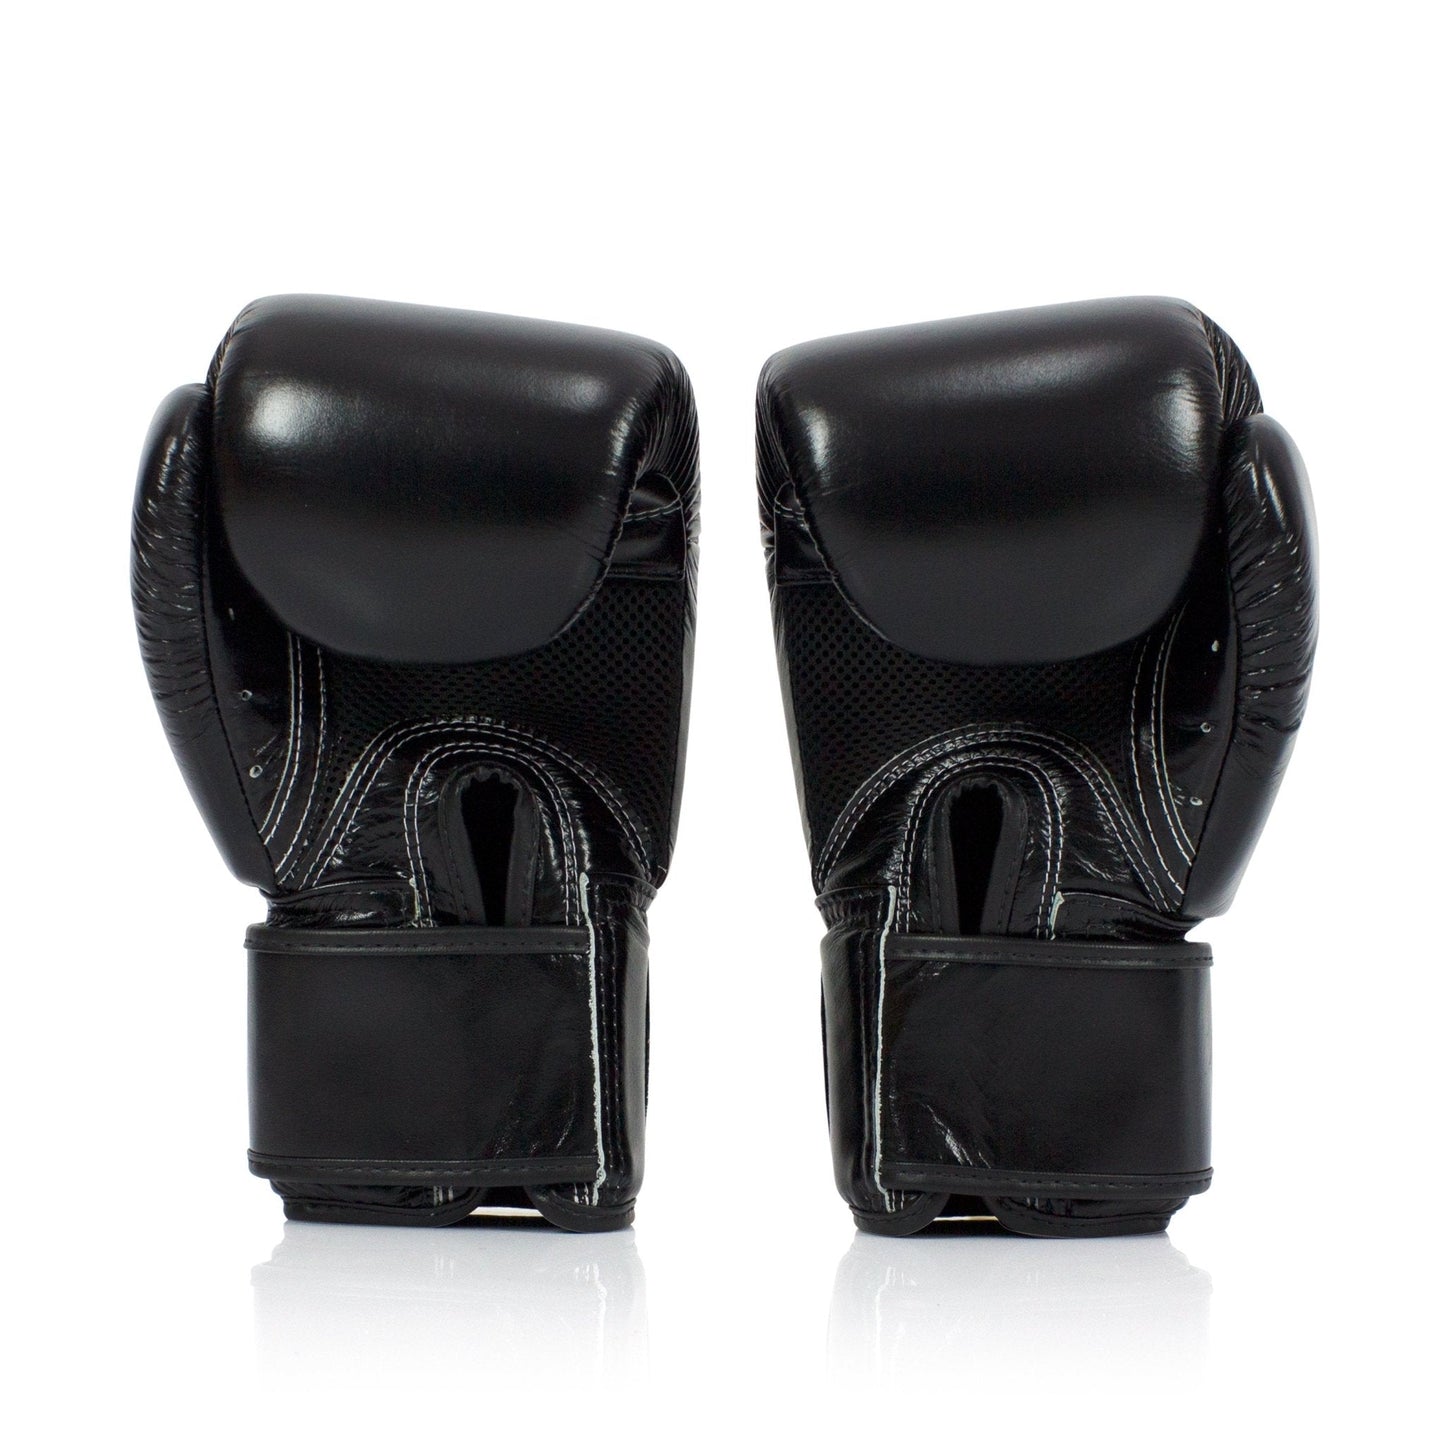 Fairtex Boxing Gloves BGV1 "Breathable" Black - SUPER EXPORT SHOP